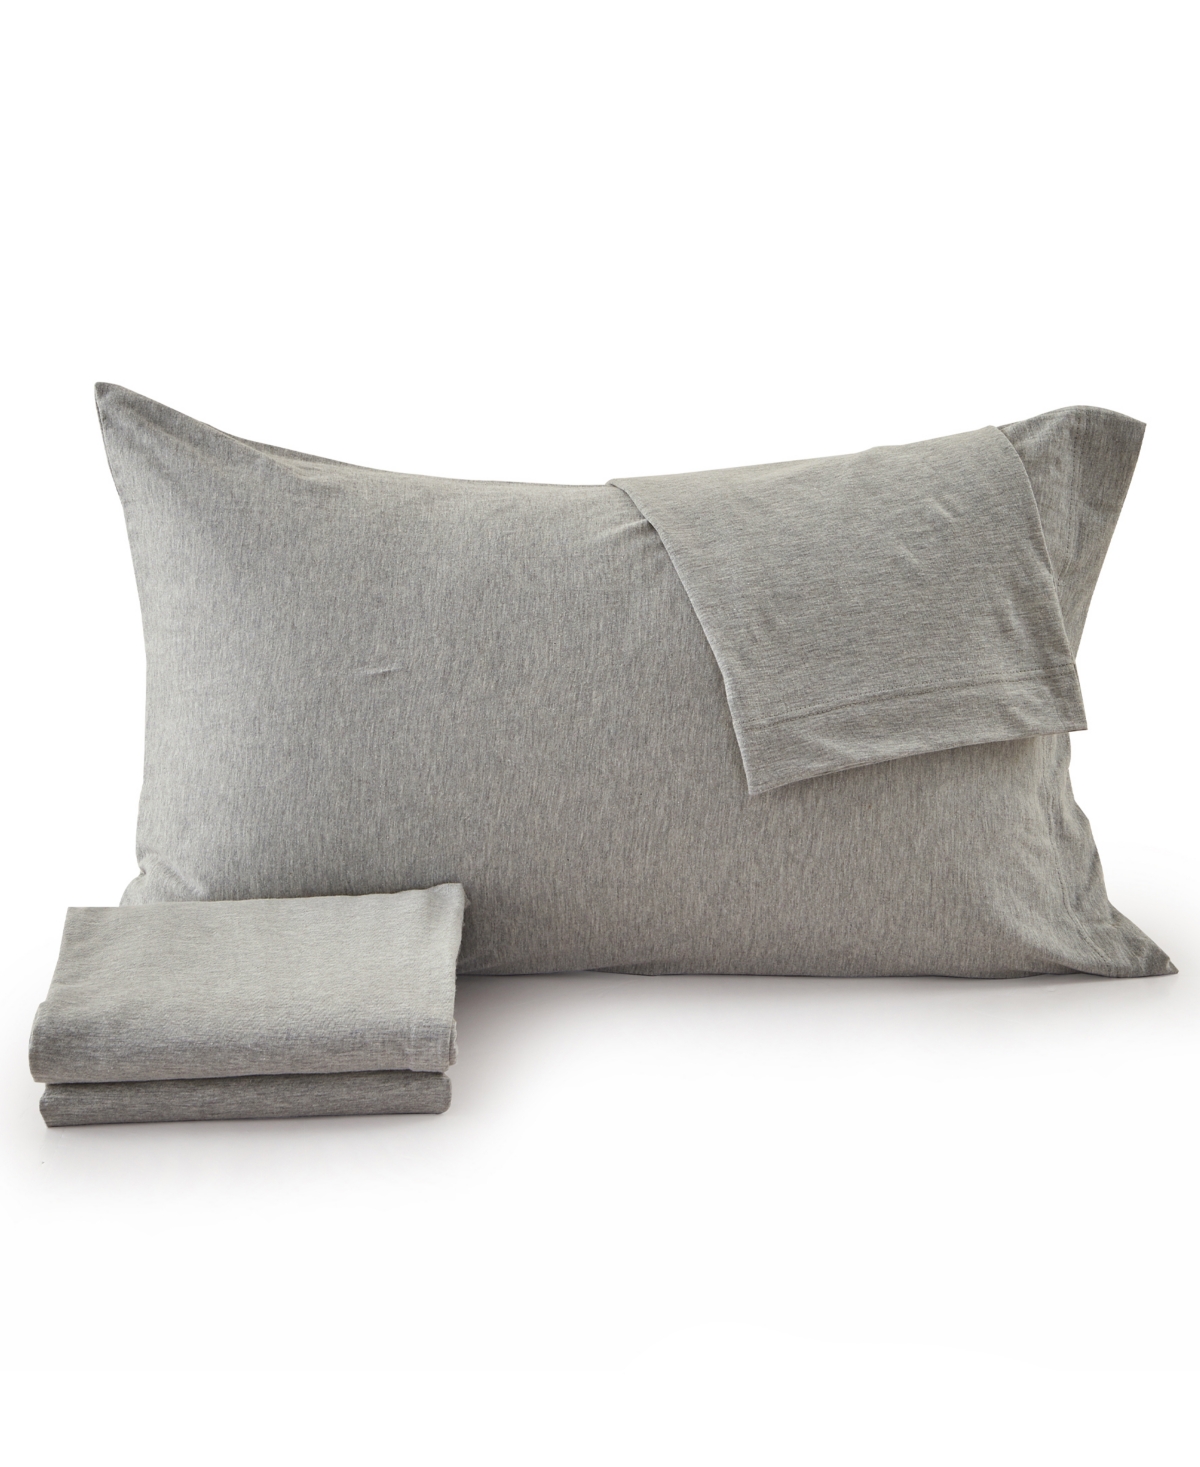 Premium Comforts Heathered Melange T-shirt Jersey Knit Cotton Blend 4 Piece Sheet Set, Queen In Light Gray